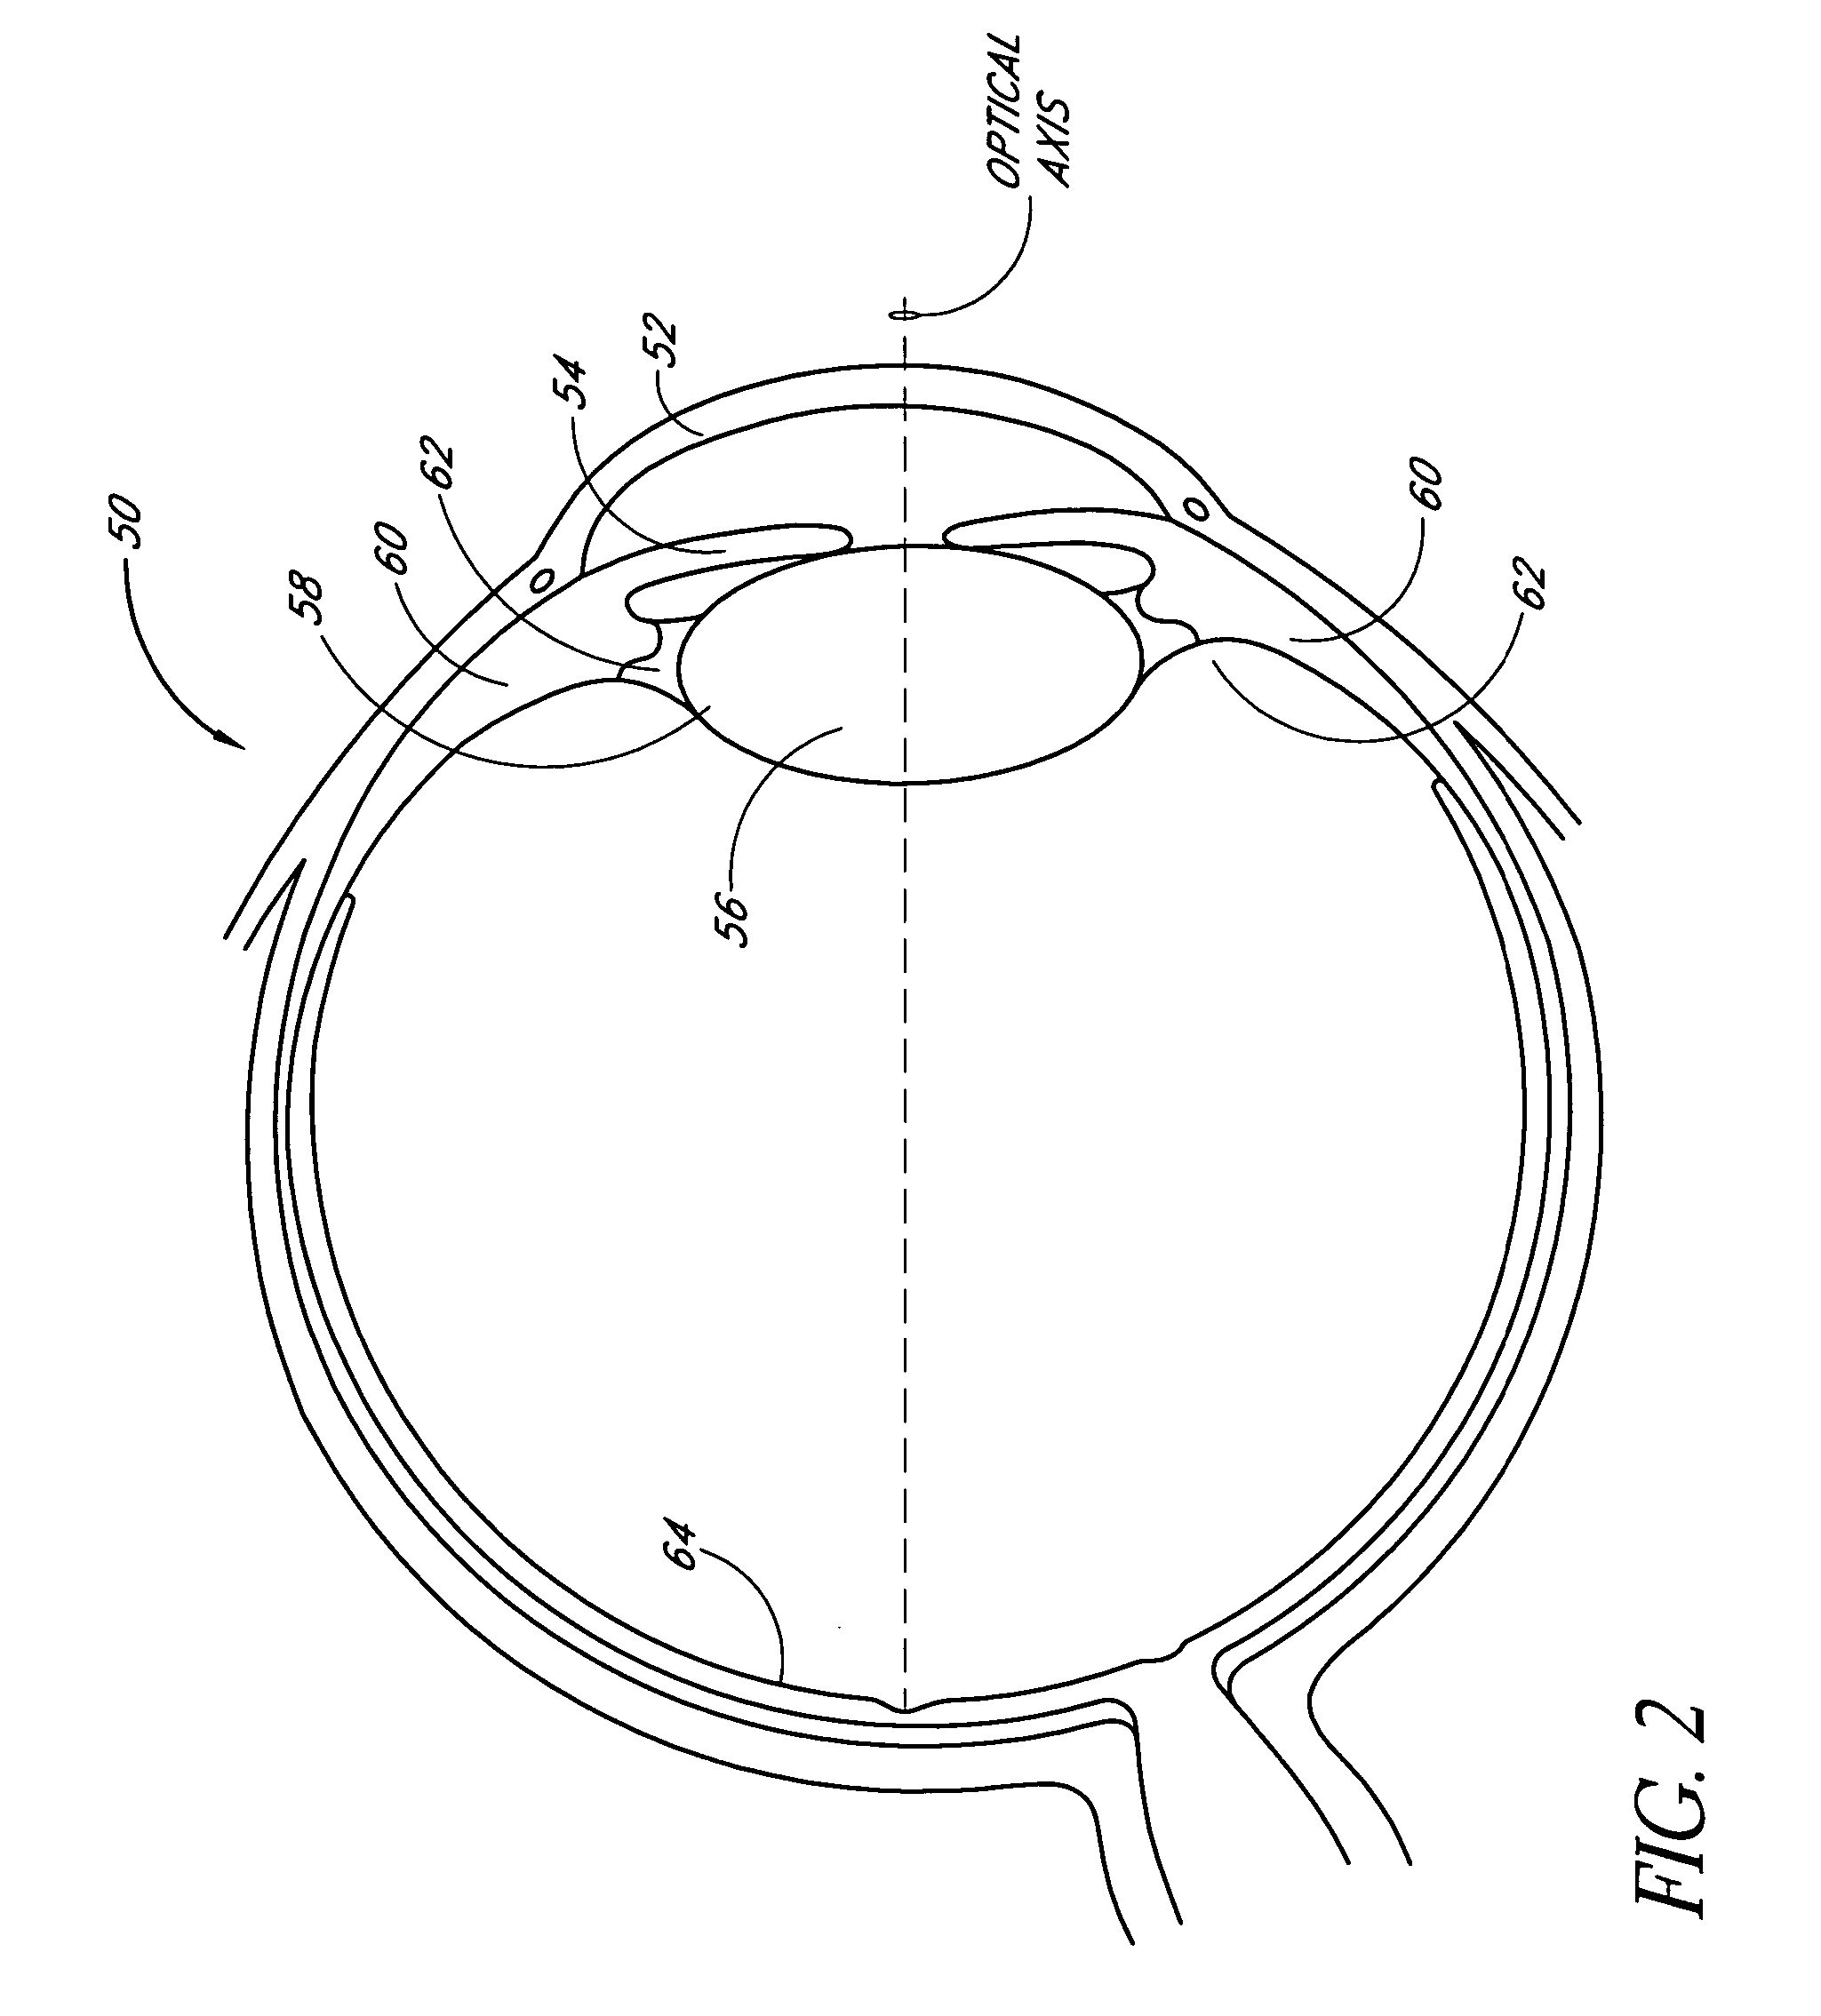 Method of implanting an intraocular lens